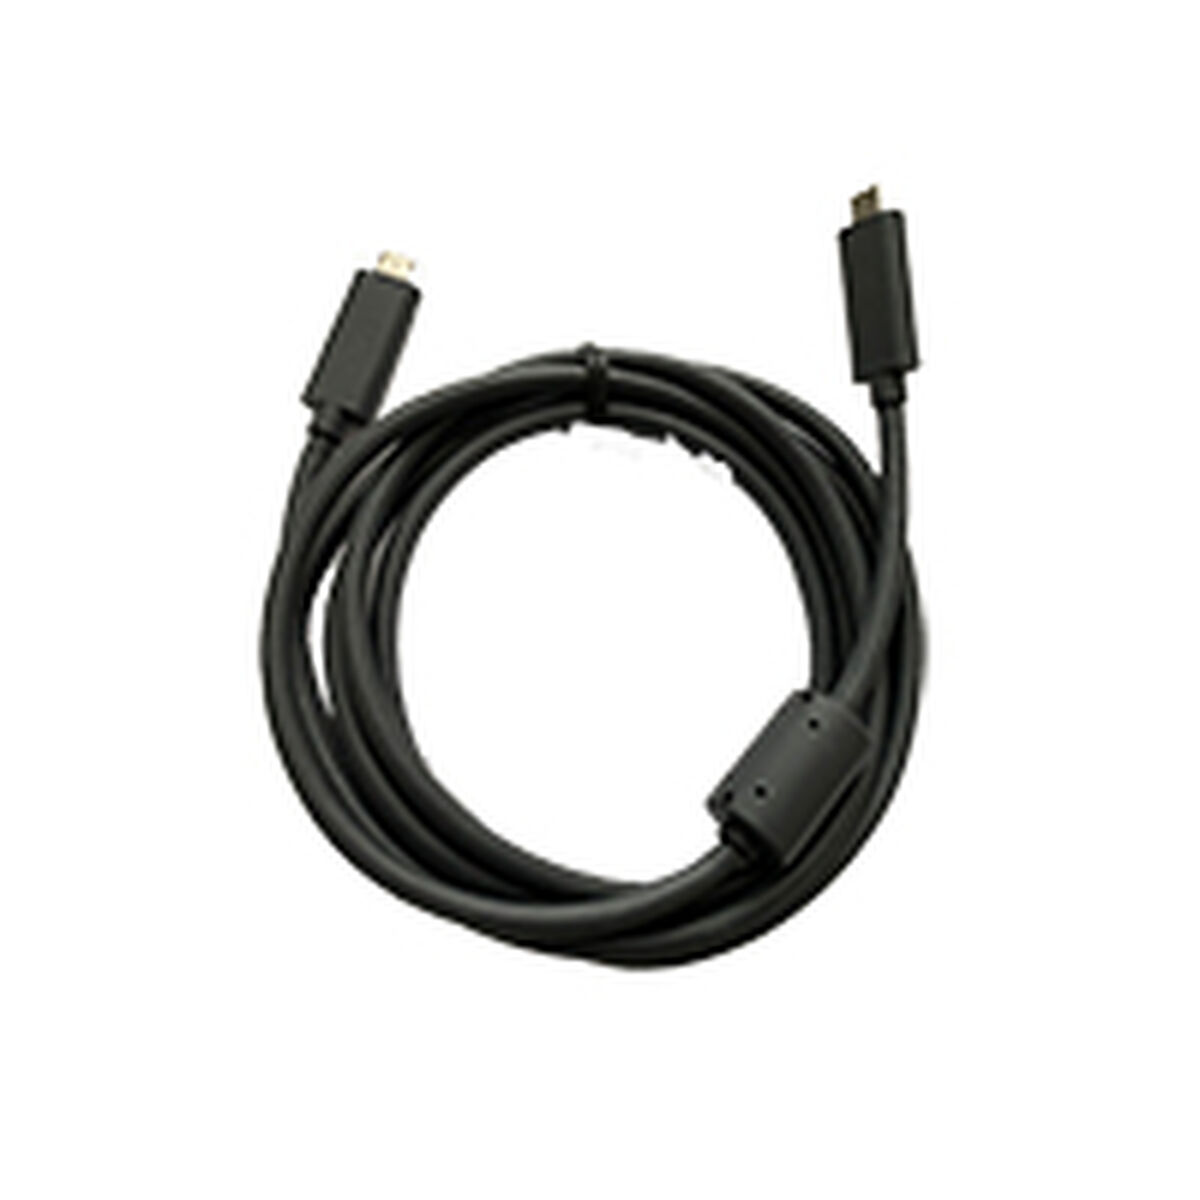 Câble USB Logitech 993-002153 Noir